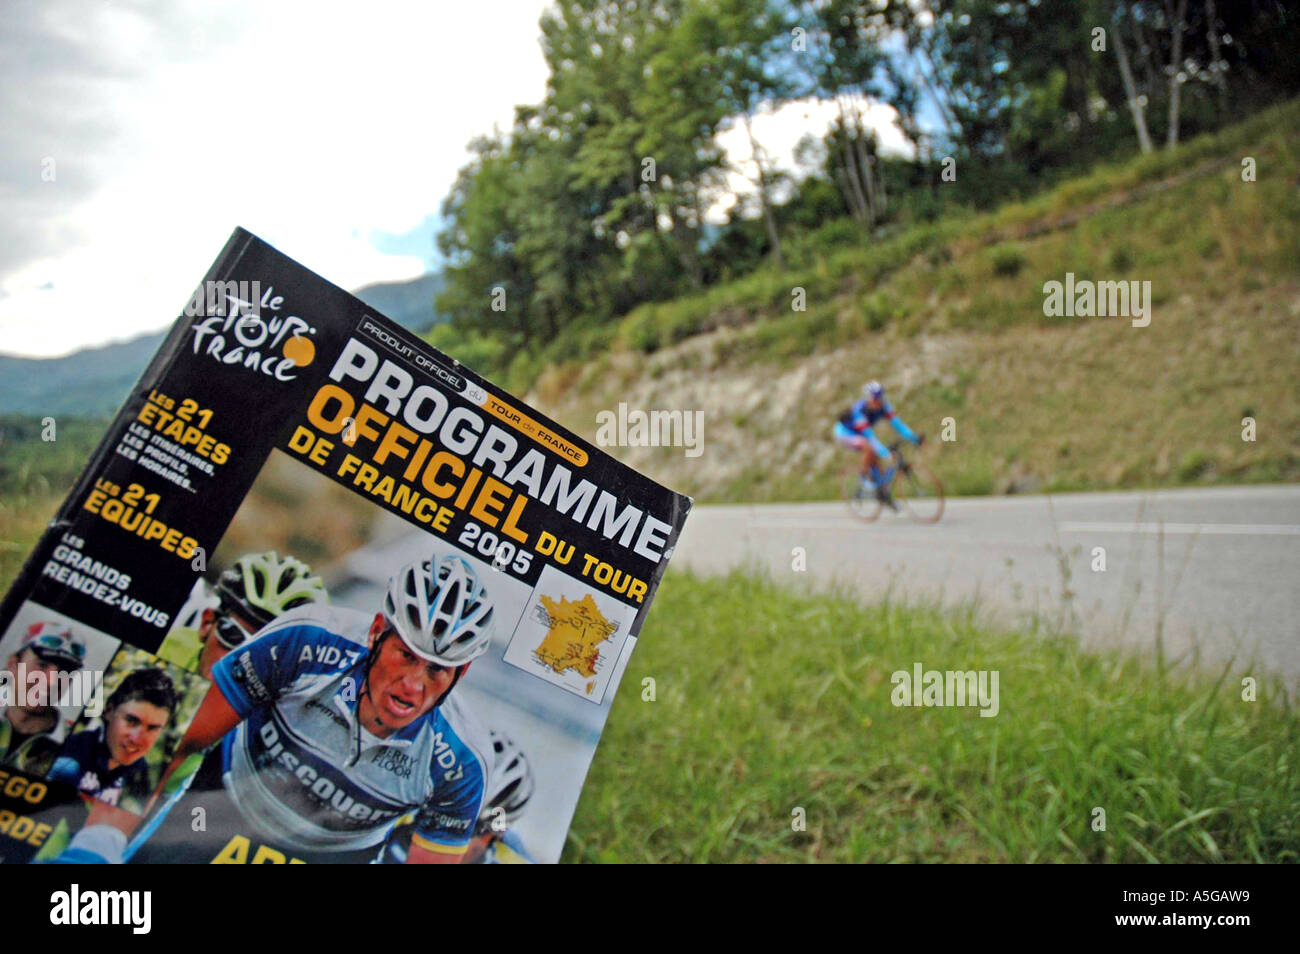 Das offizielle Programm der Tour du France 2005 Stockfoto